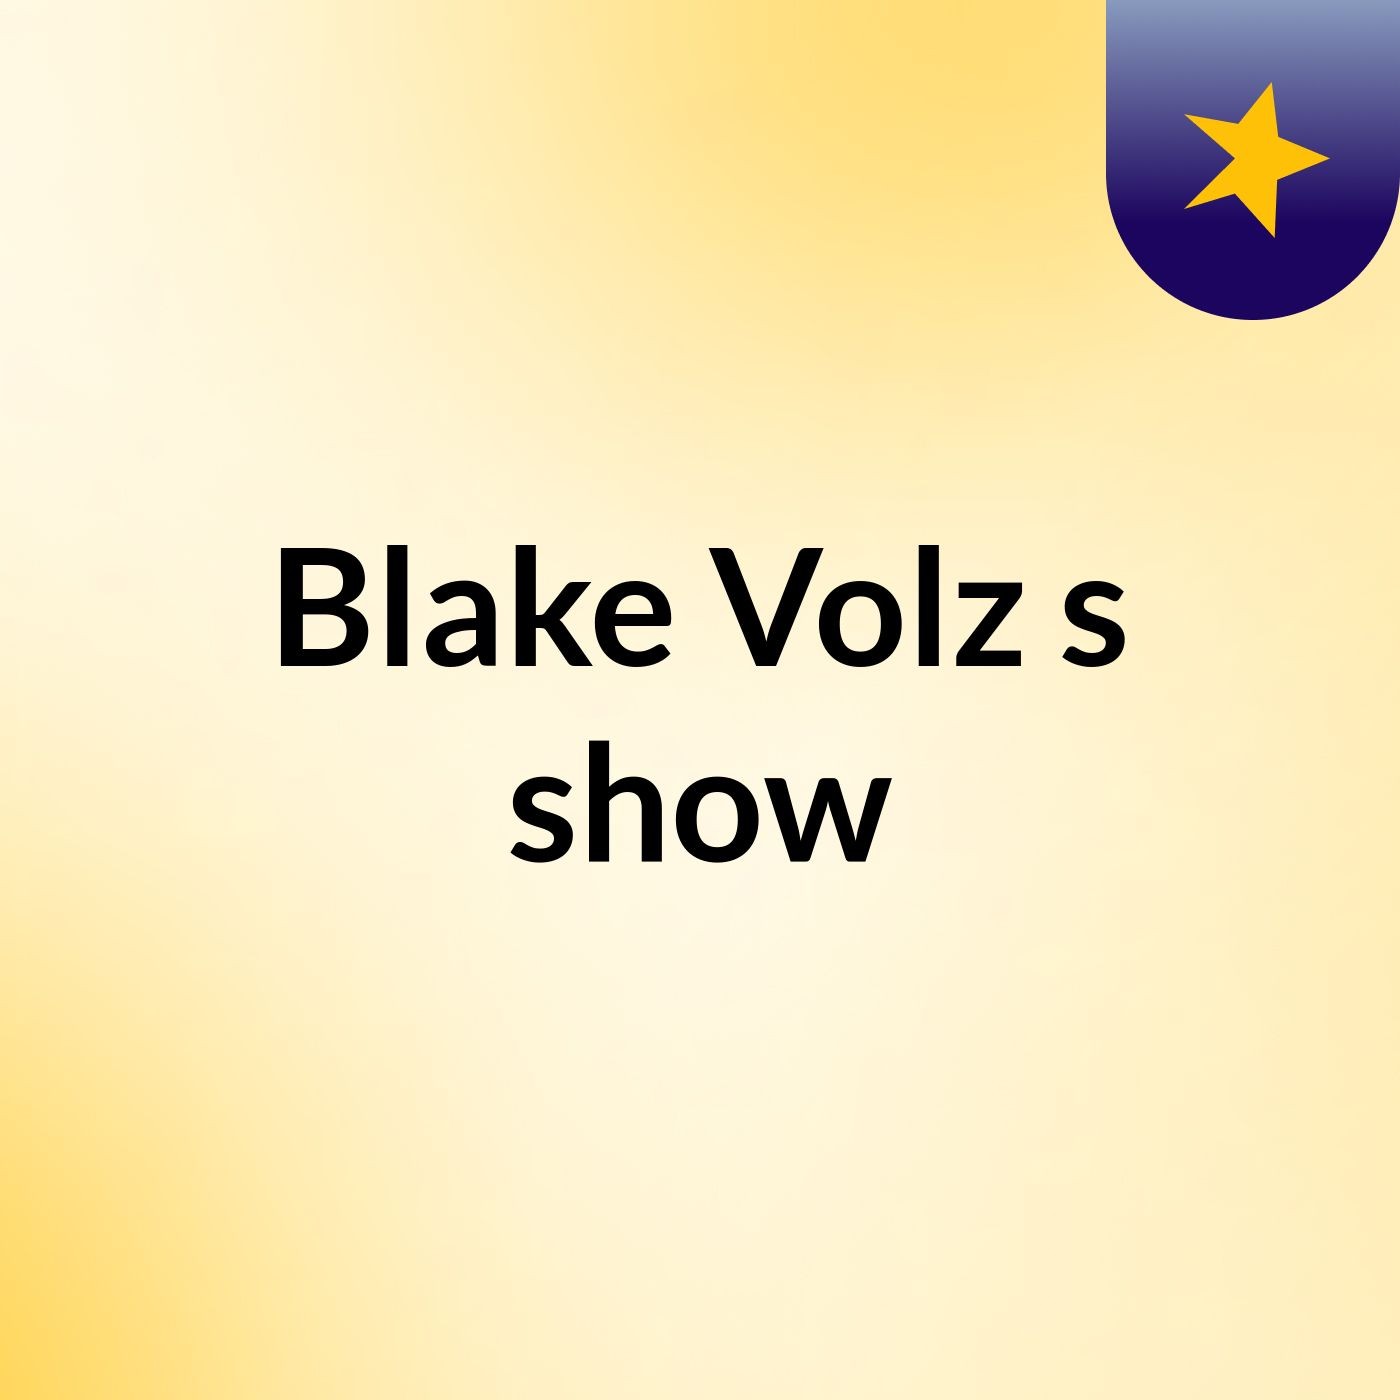 Episode 12 - Blake Volz's show